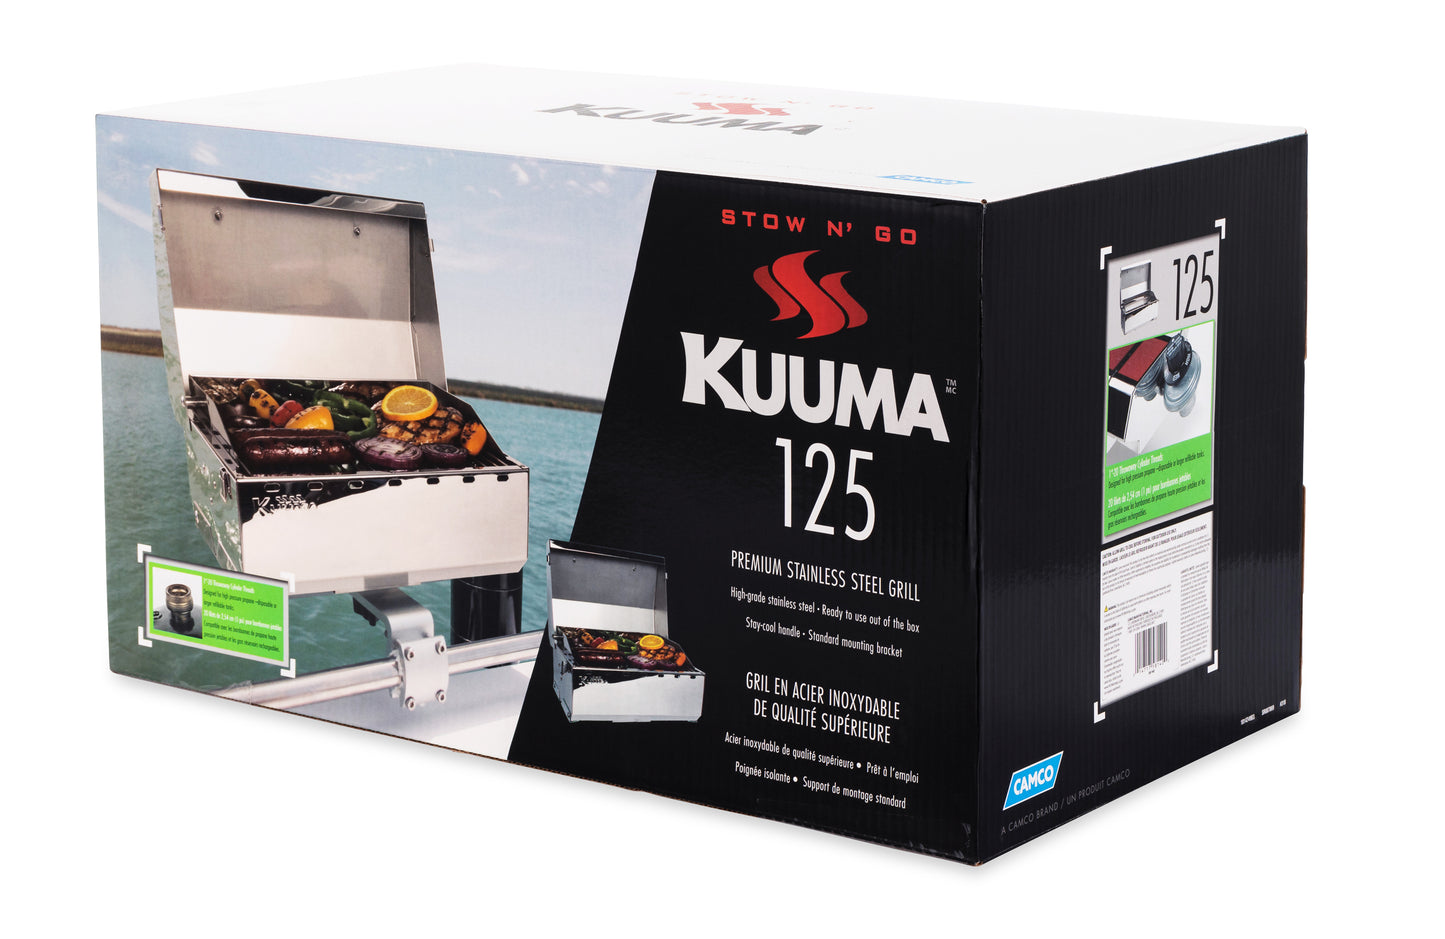 Kuuma Stow N' Go 125 Marine Gas Grill for Boats